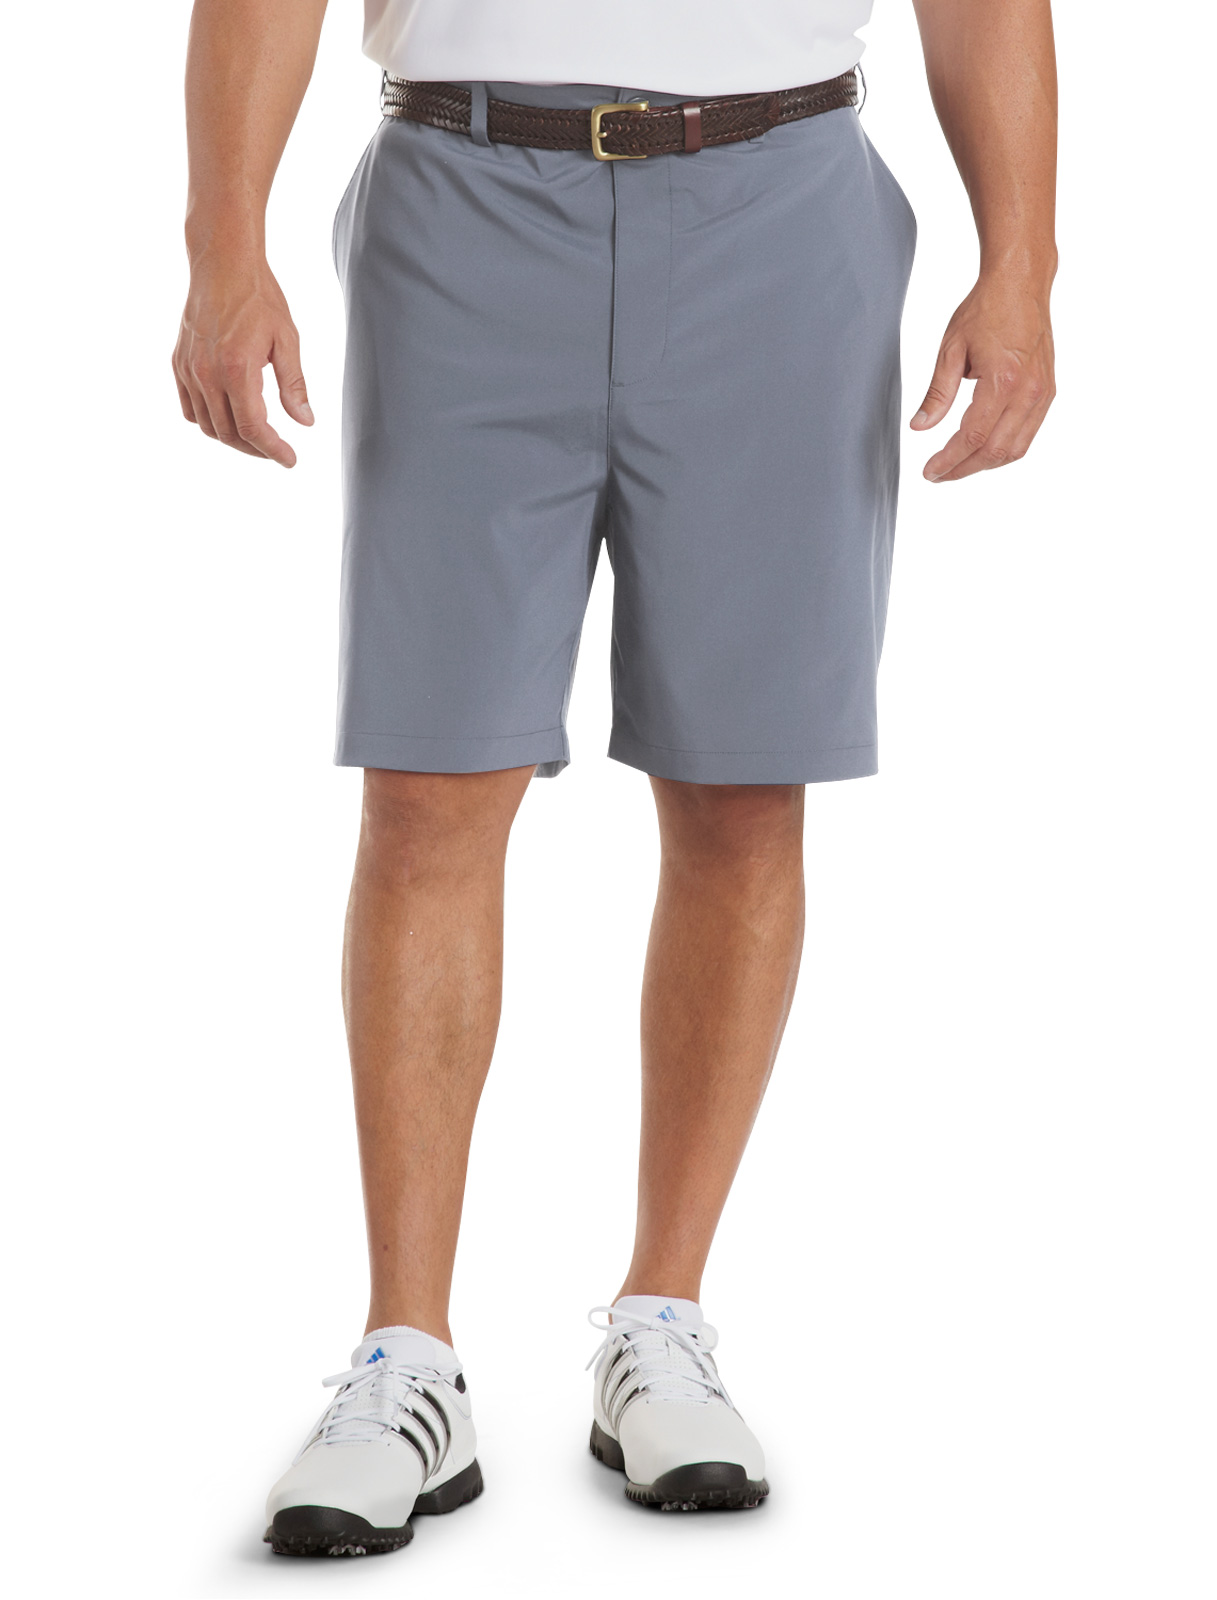 Reebok Men's Big and Tall Flat-Front Shorts